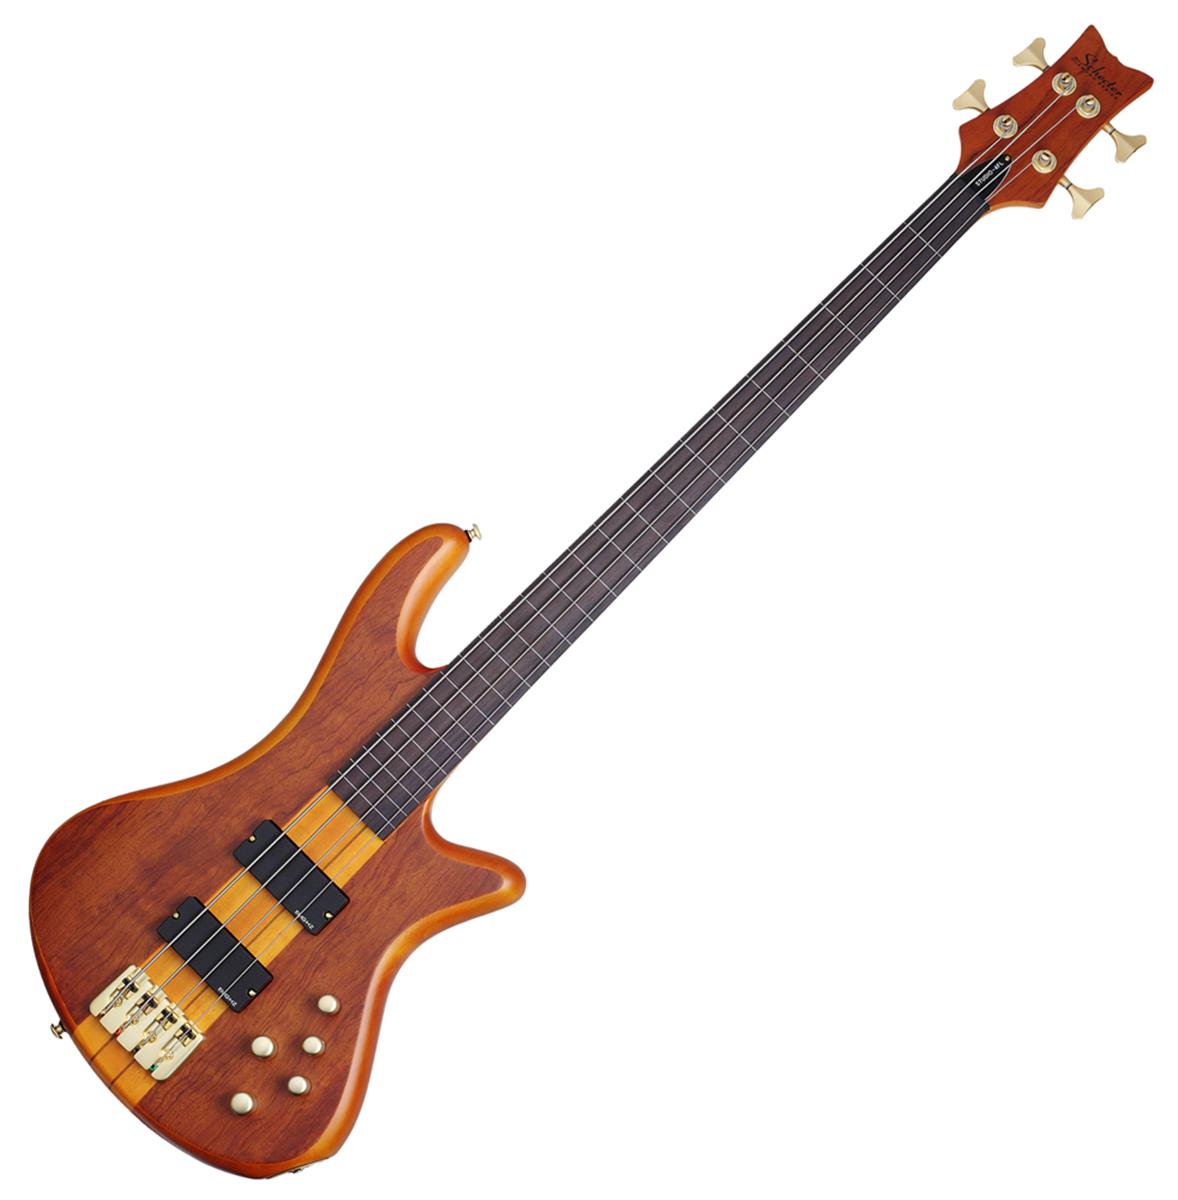 Guitar Bass 17371 Hd Wallpapers in Music   Imagescicom